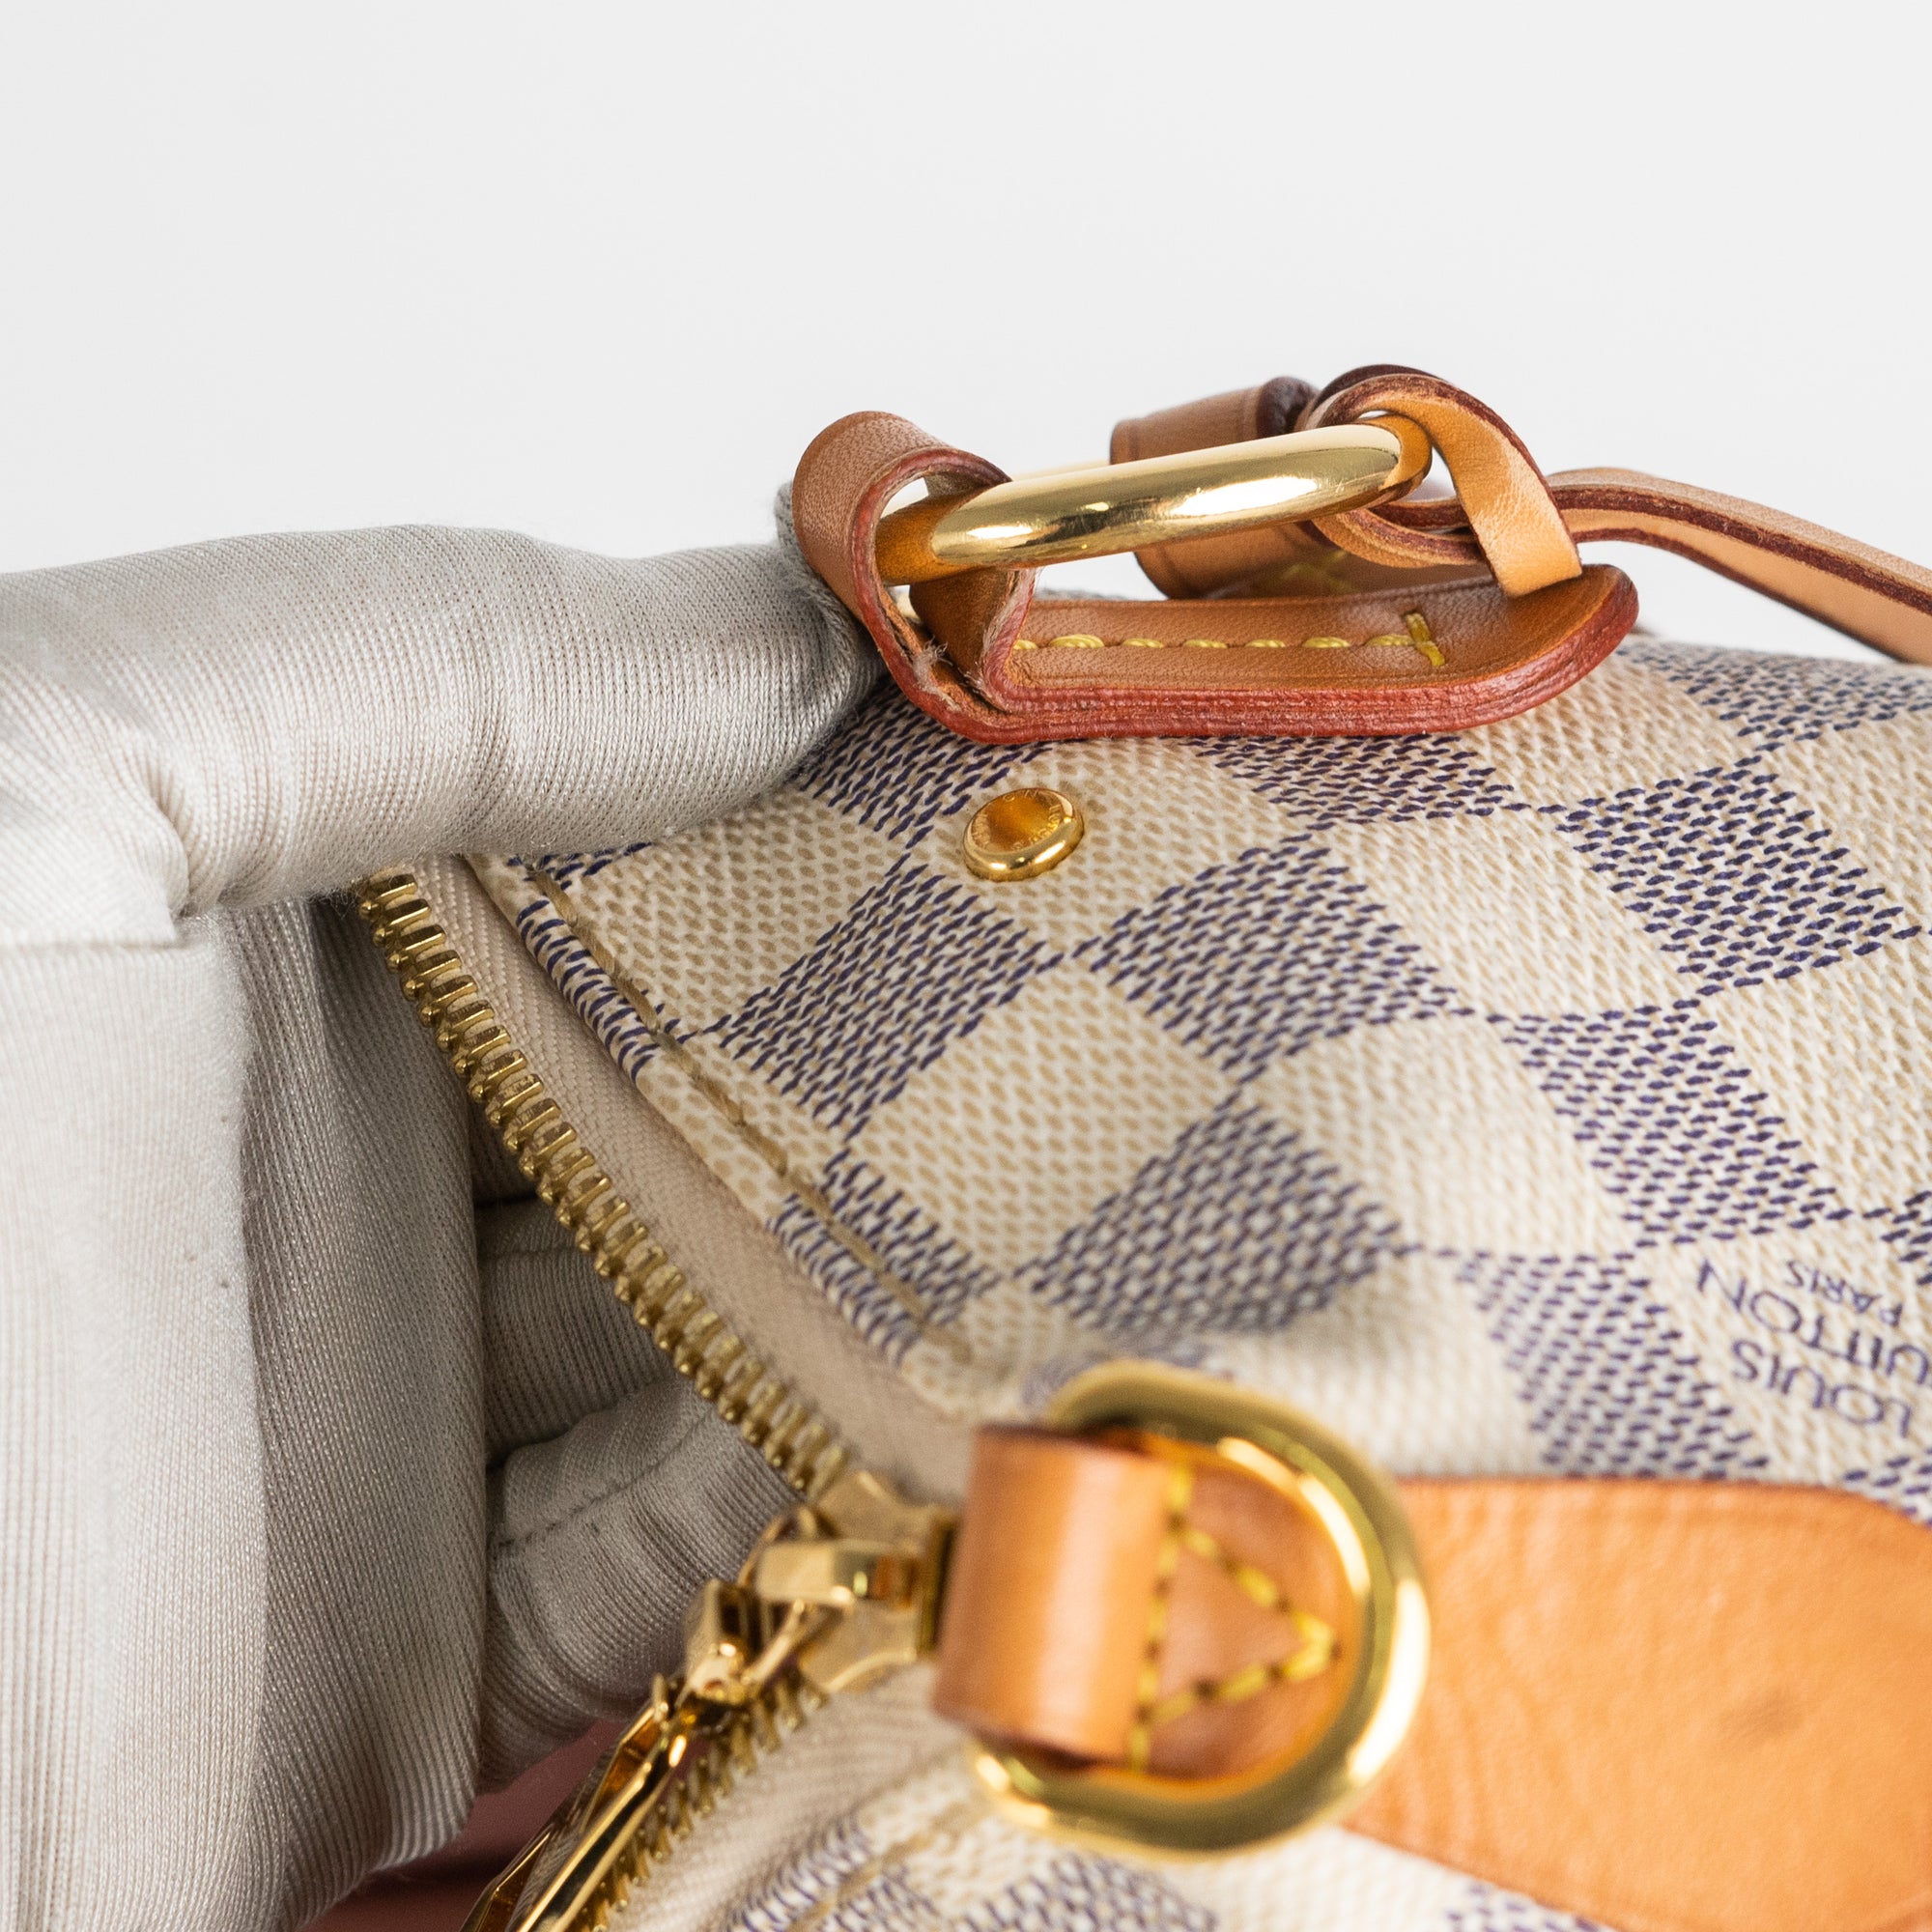 New Lymington purse from LV ❤️ gorgeous bag! #louisvuitton